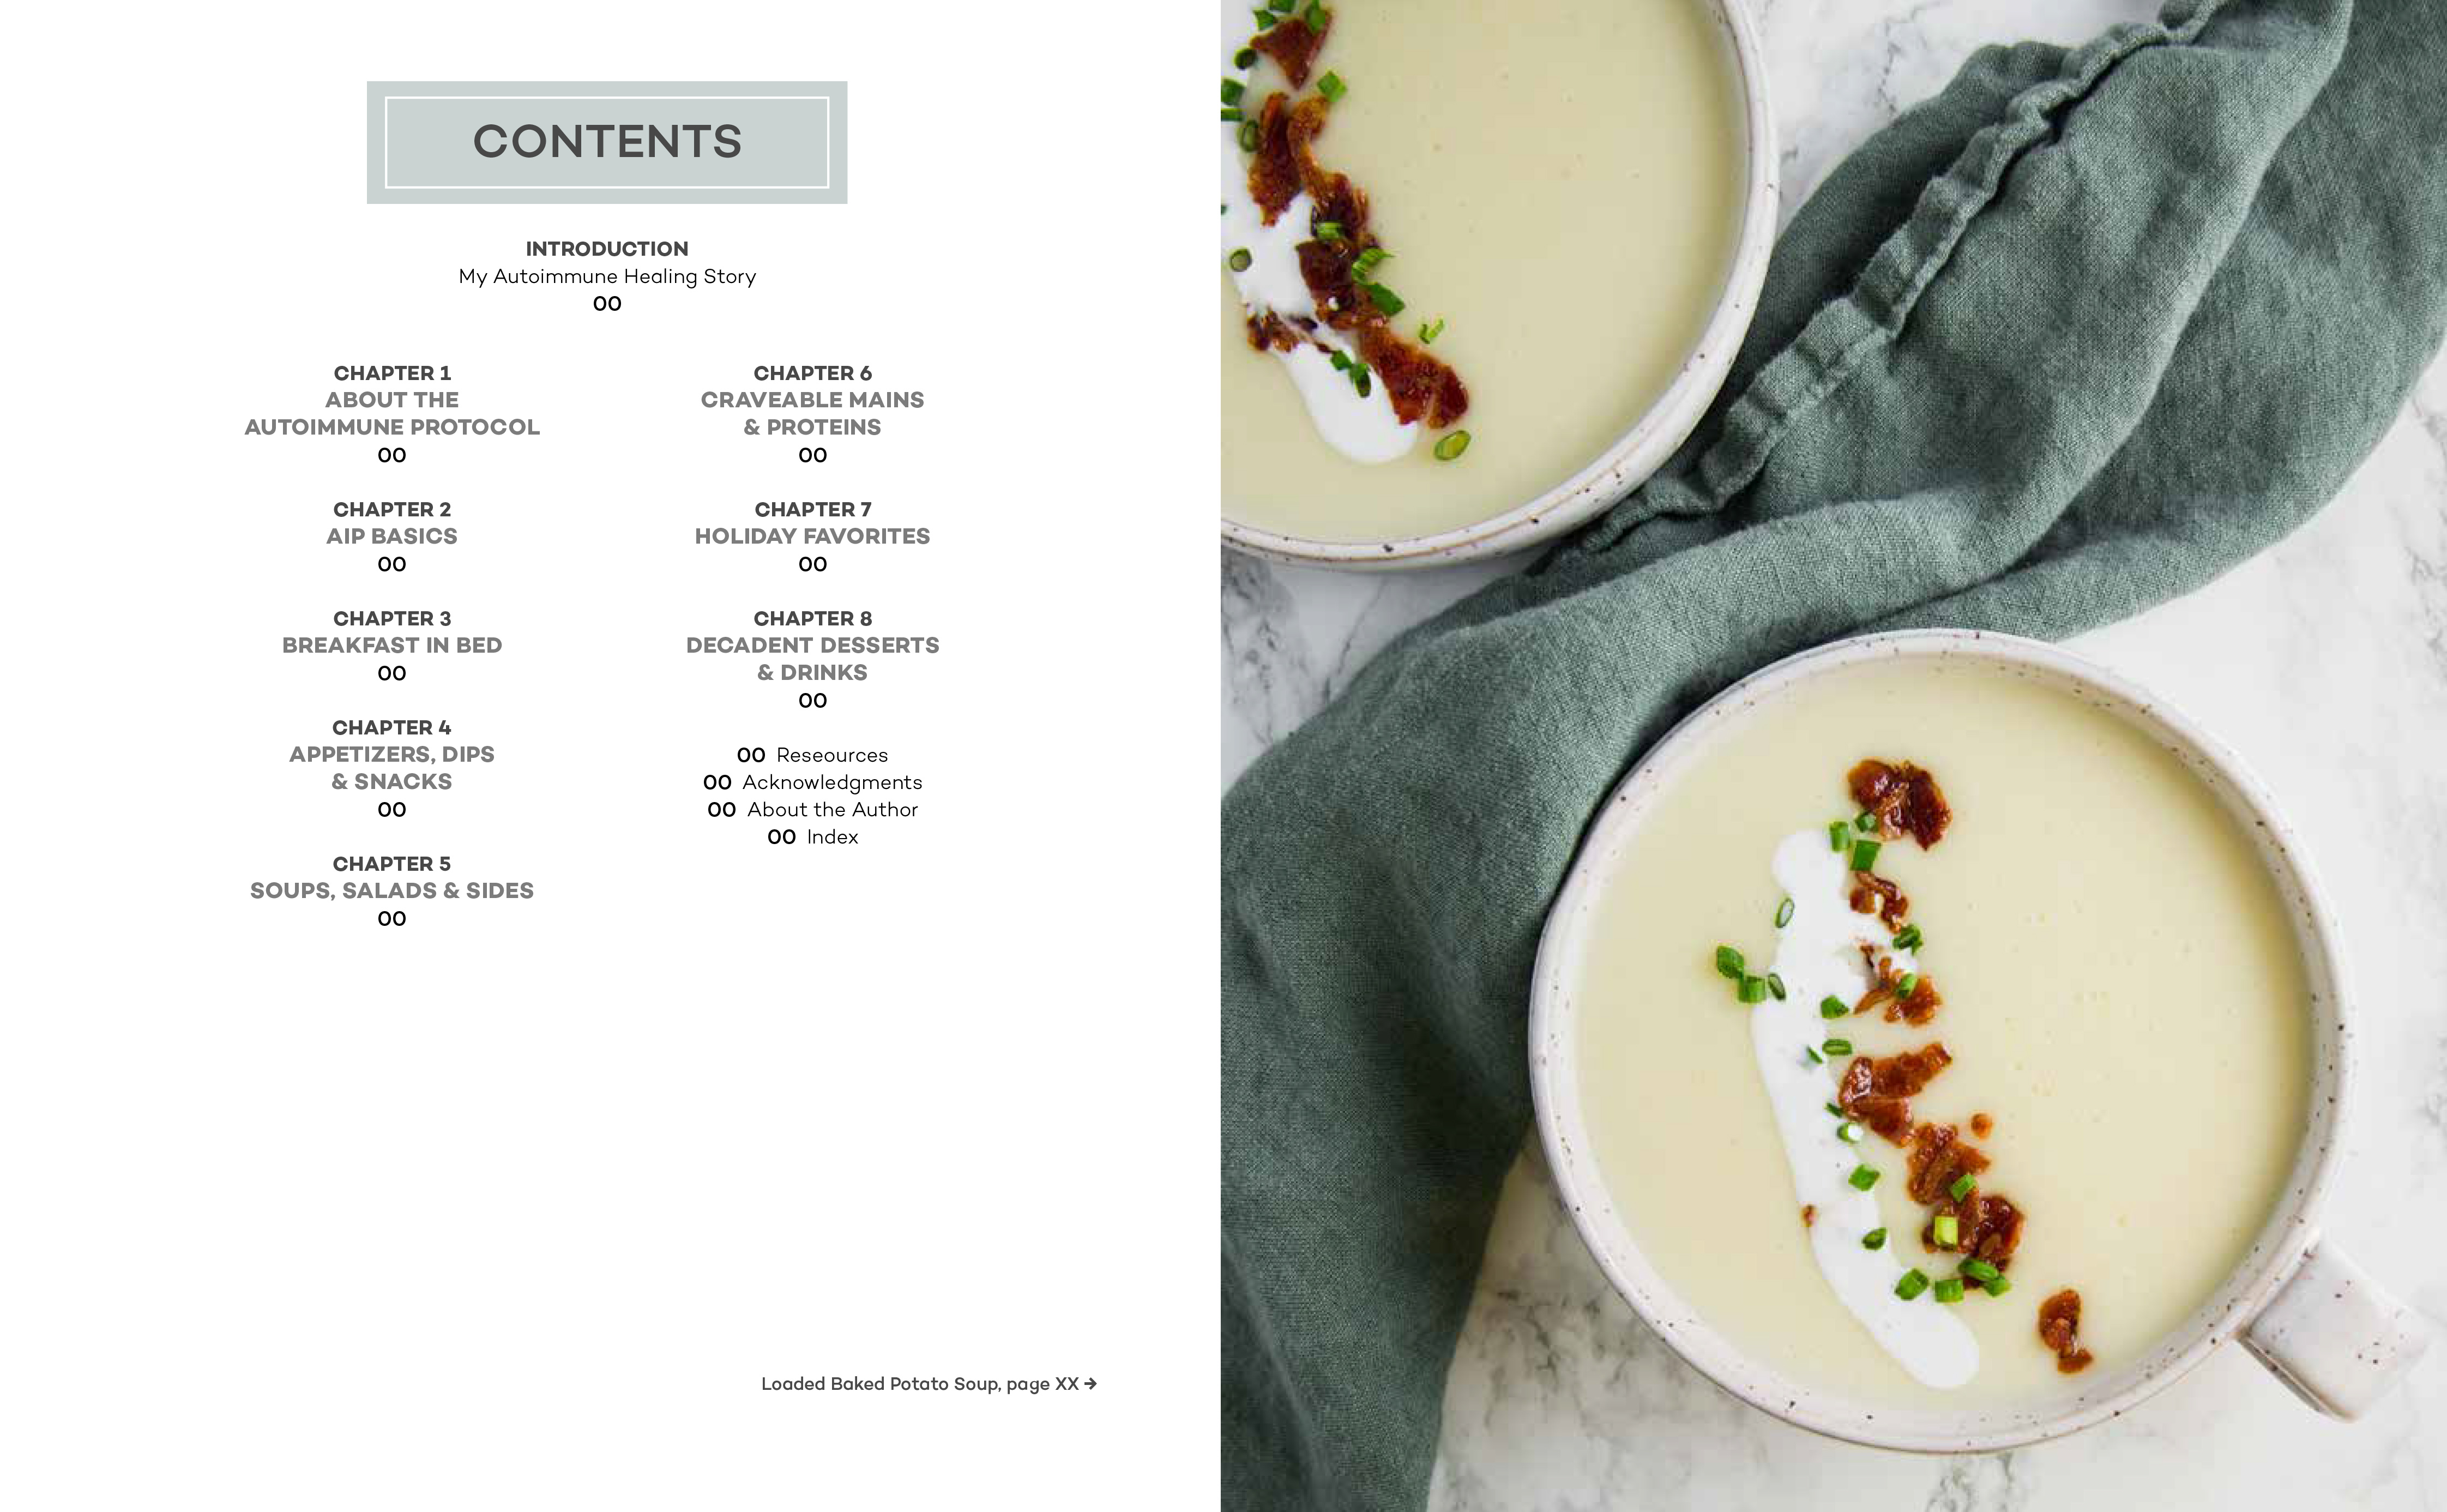 The Autoimmune Protocol Comfort Food Cookbook